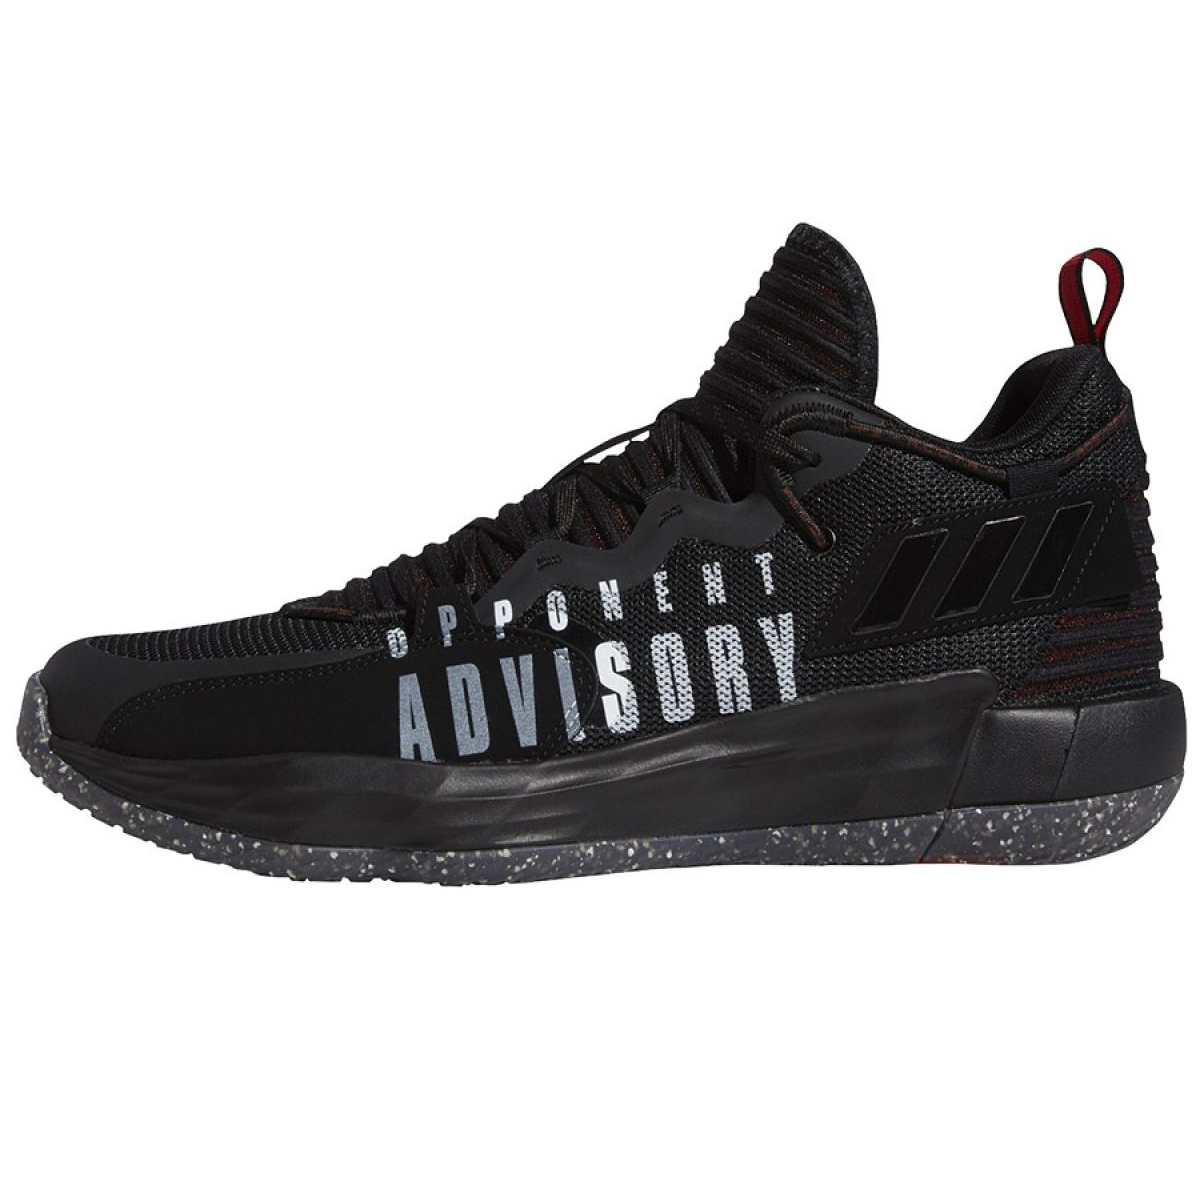 Buty do koszykówki adidas Dame 7 Extply M FY9939 czarne czarne